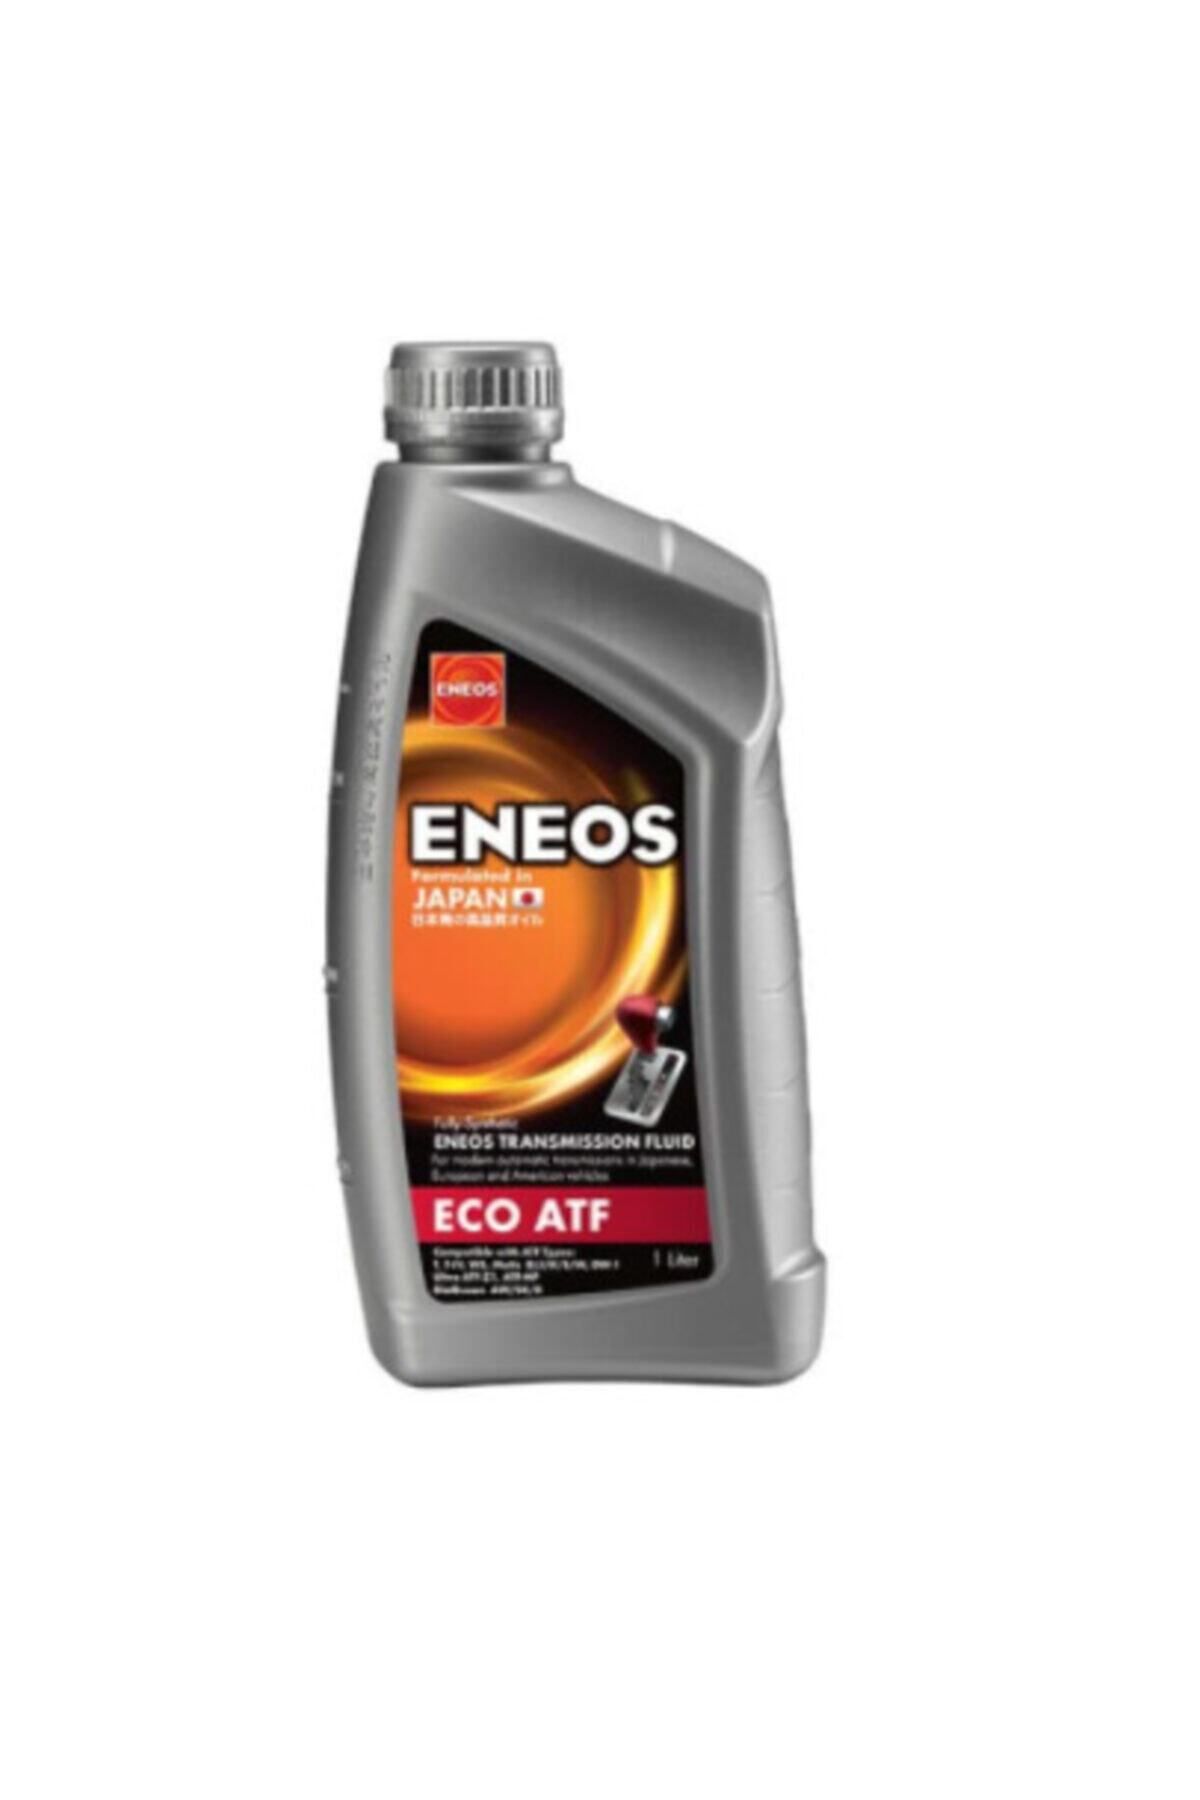 ENEOS Eco Atf 1 Litre